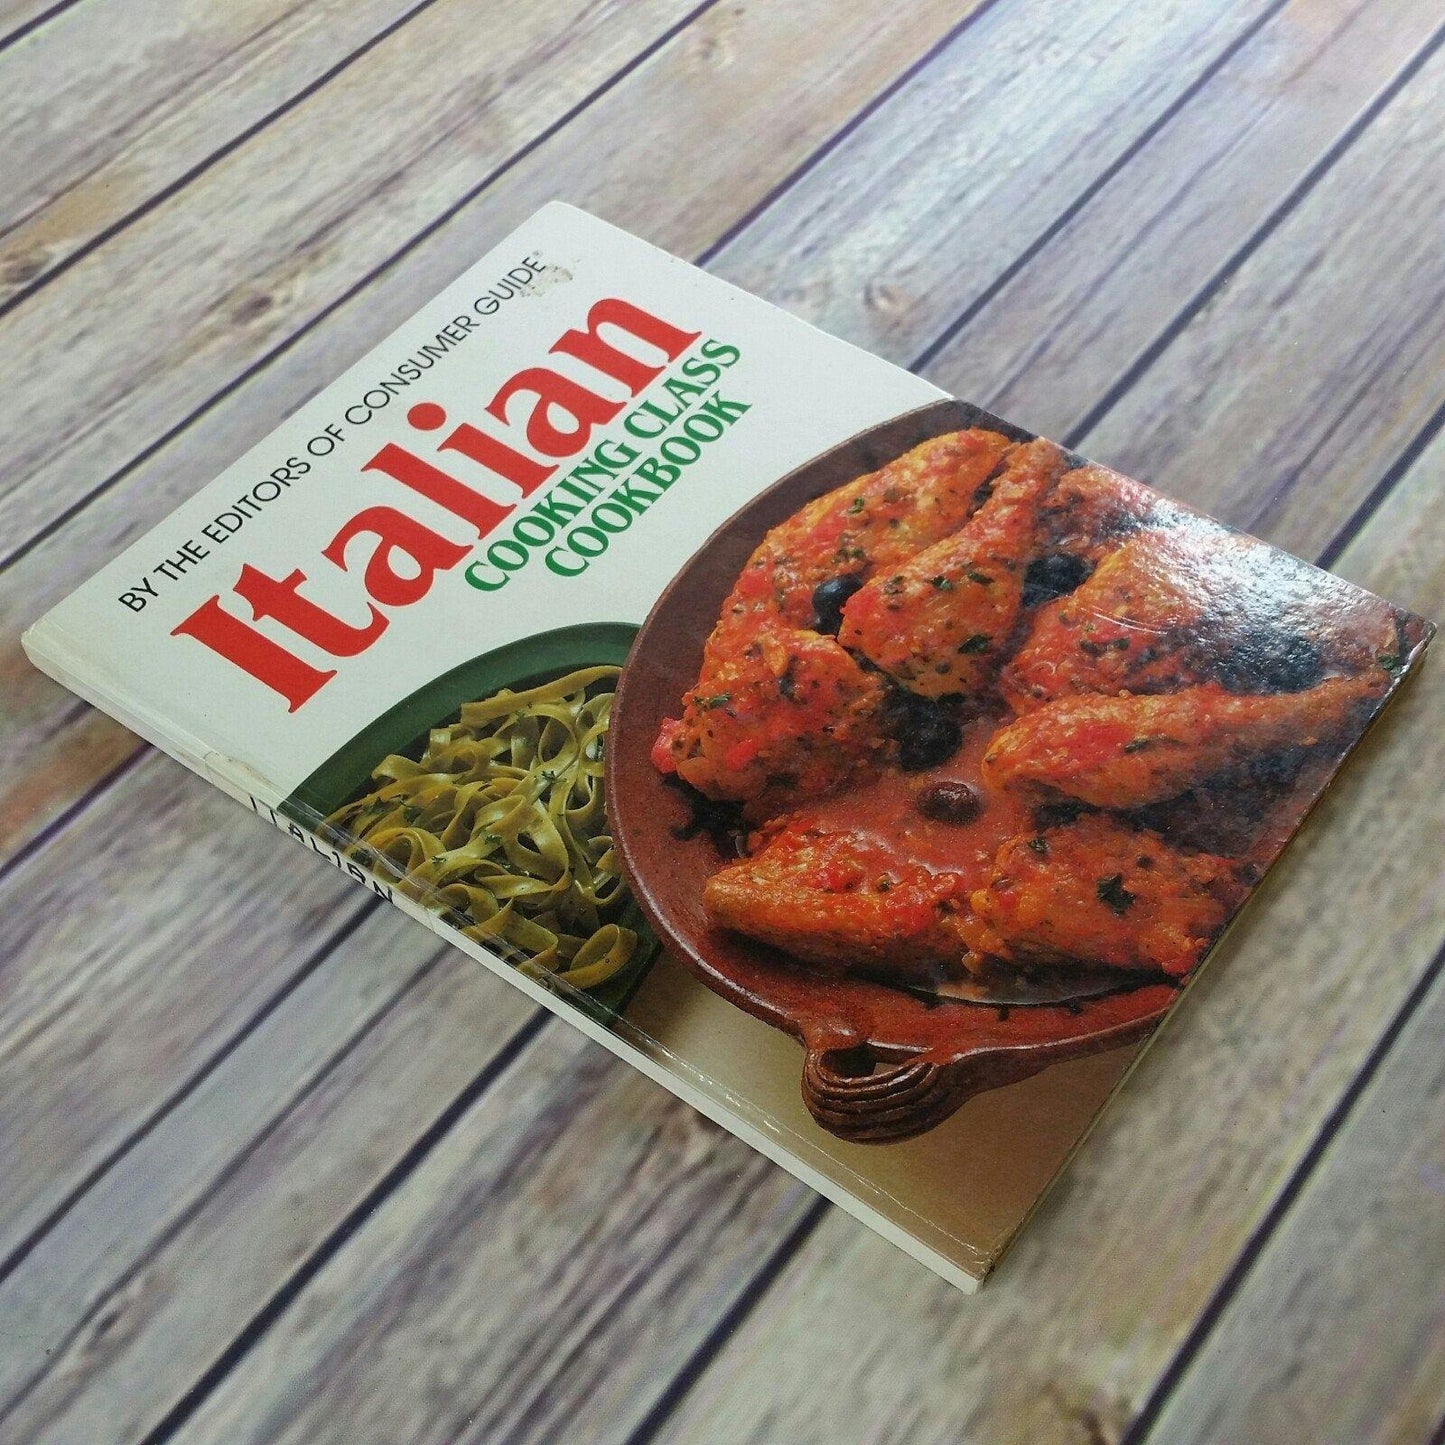 Vintage Italian Cookbook Cooking Class Consumer Guide Editors 1982 Hardcover Italian Food Italian Recipes